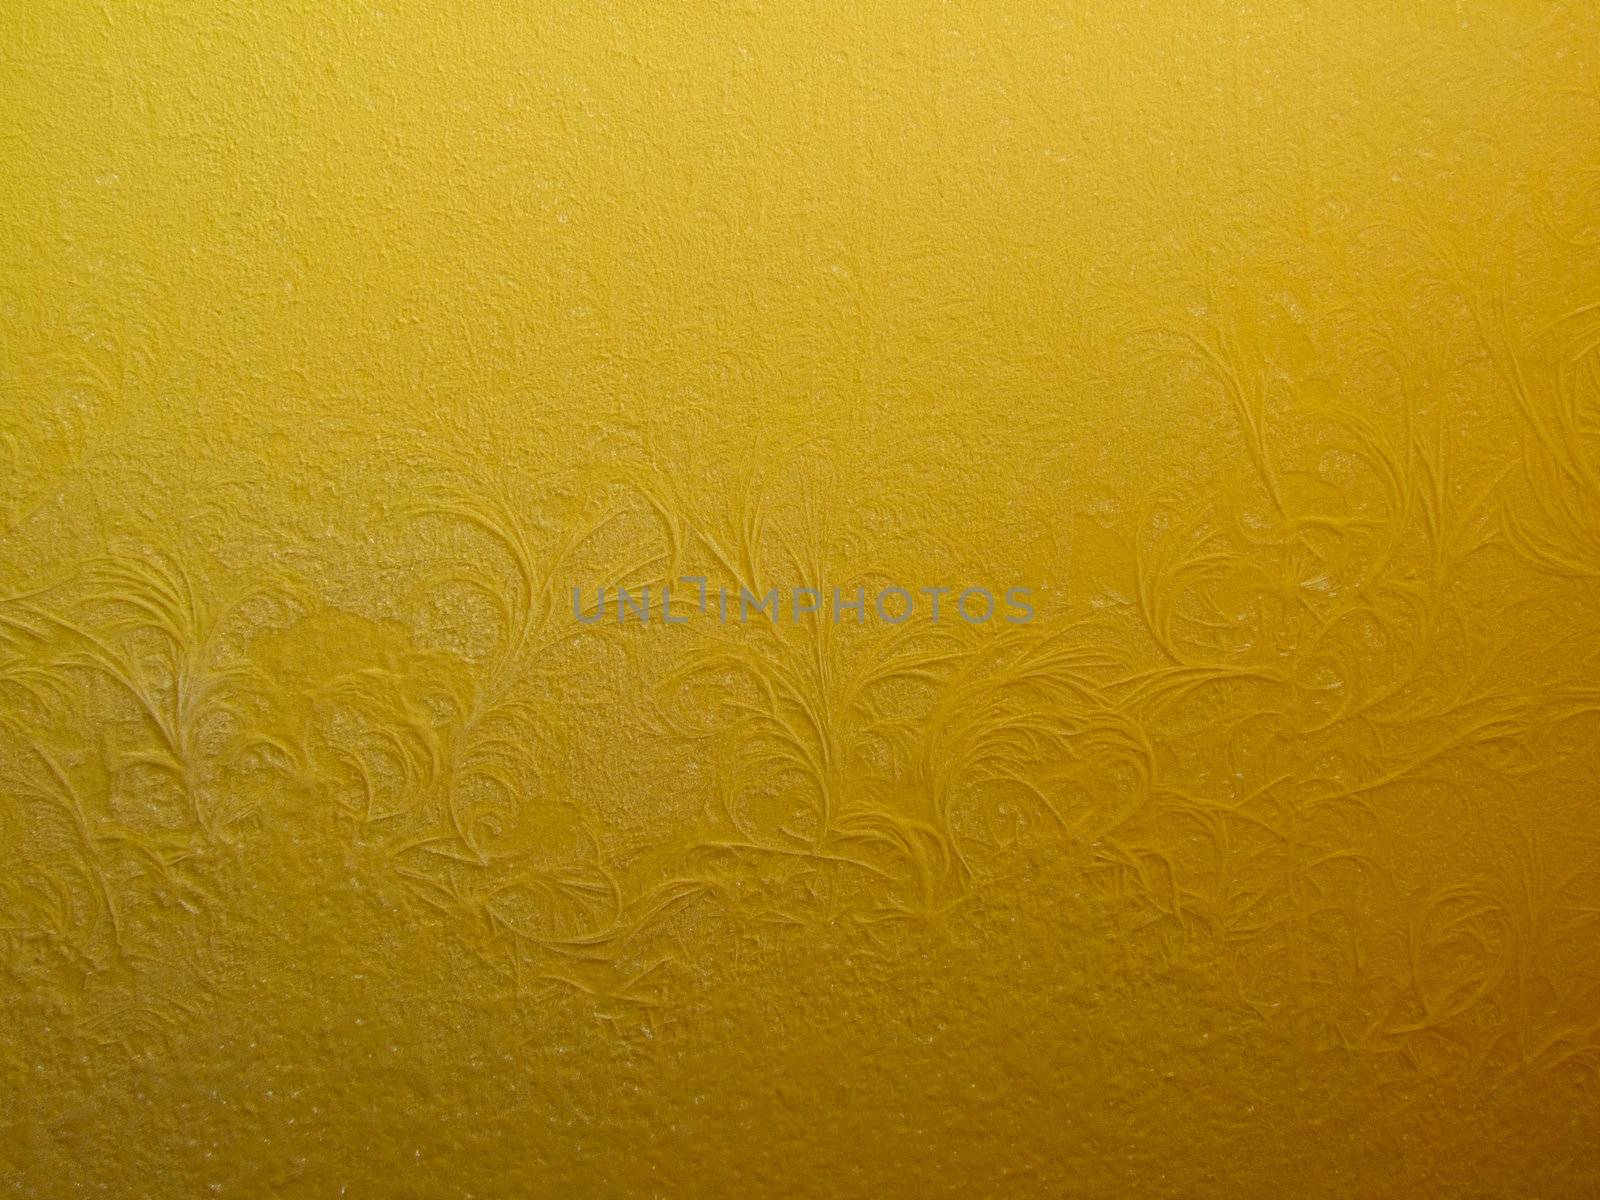 Frosty pattern on a yellow wall